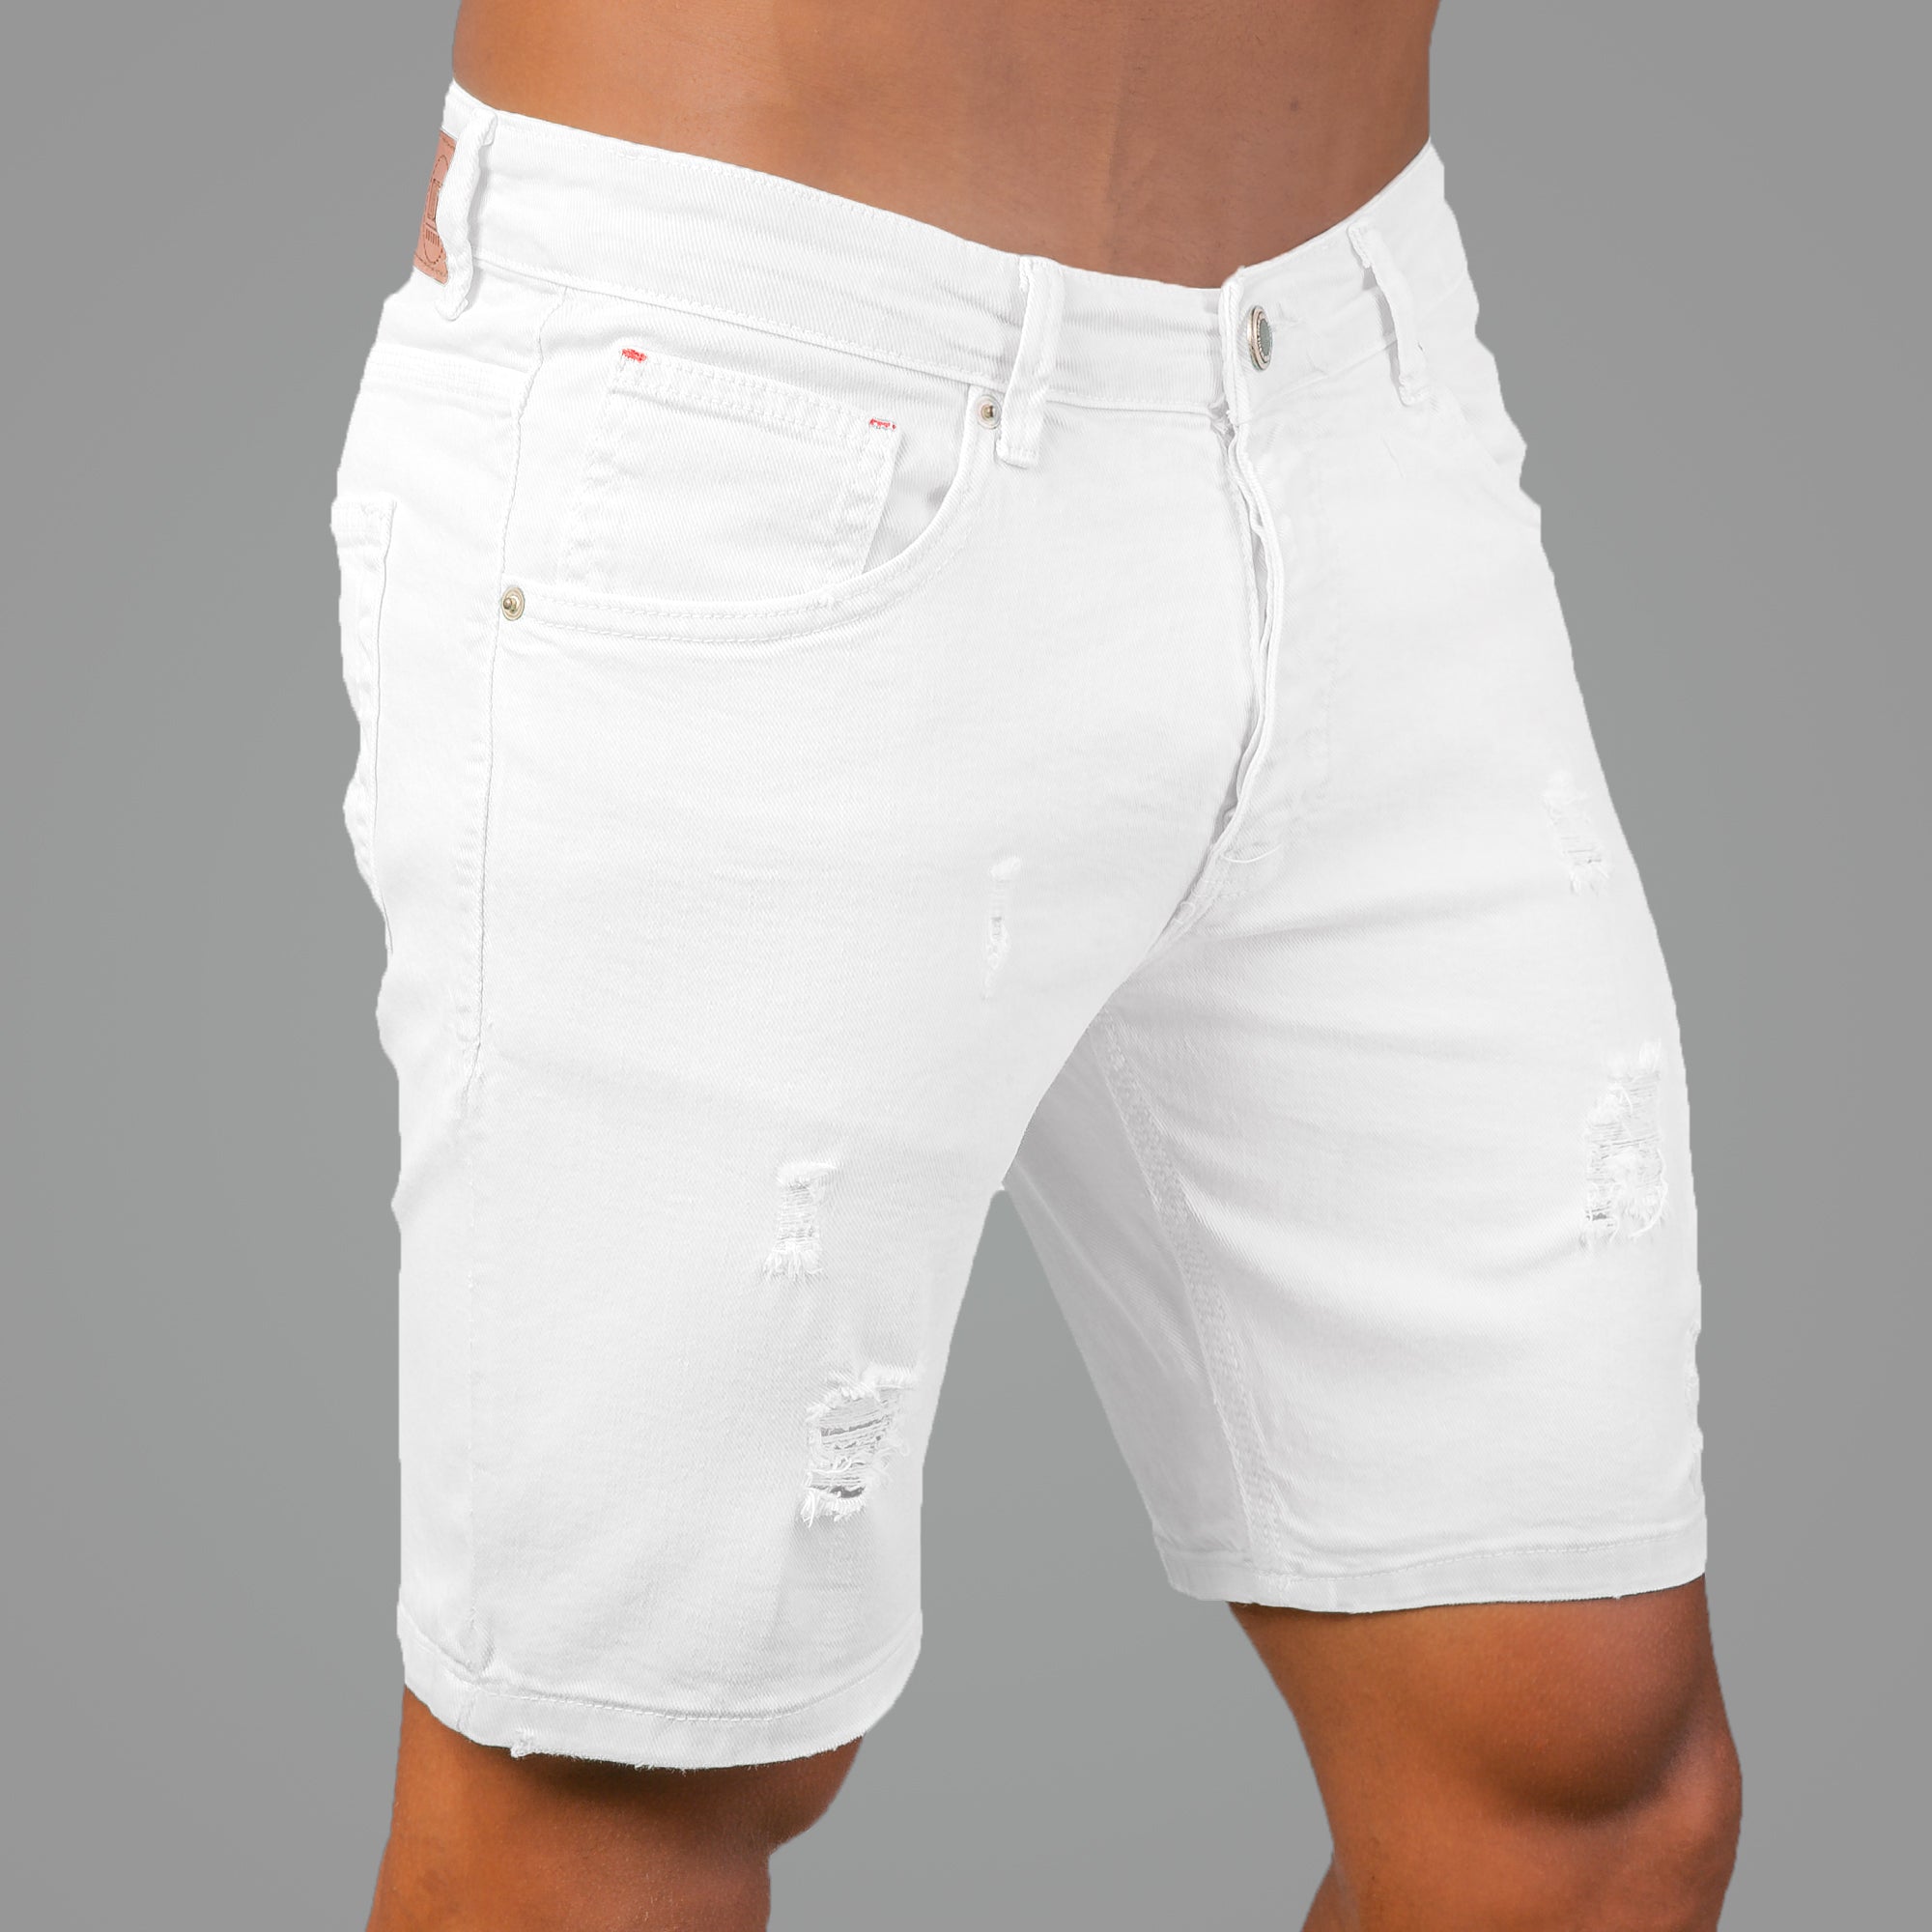 White Jeans Shorts